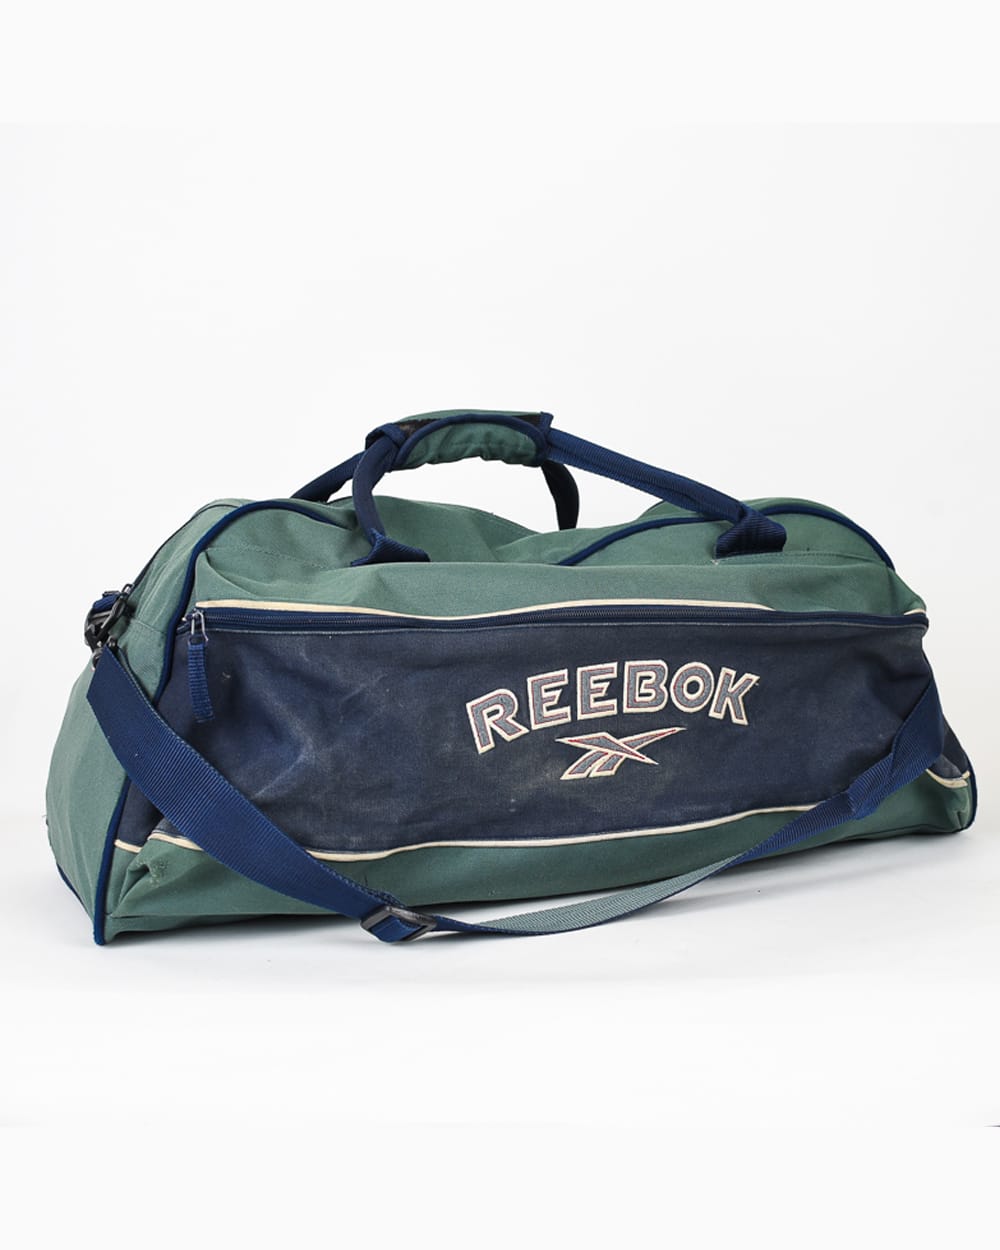  Reebok Duffle Bag